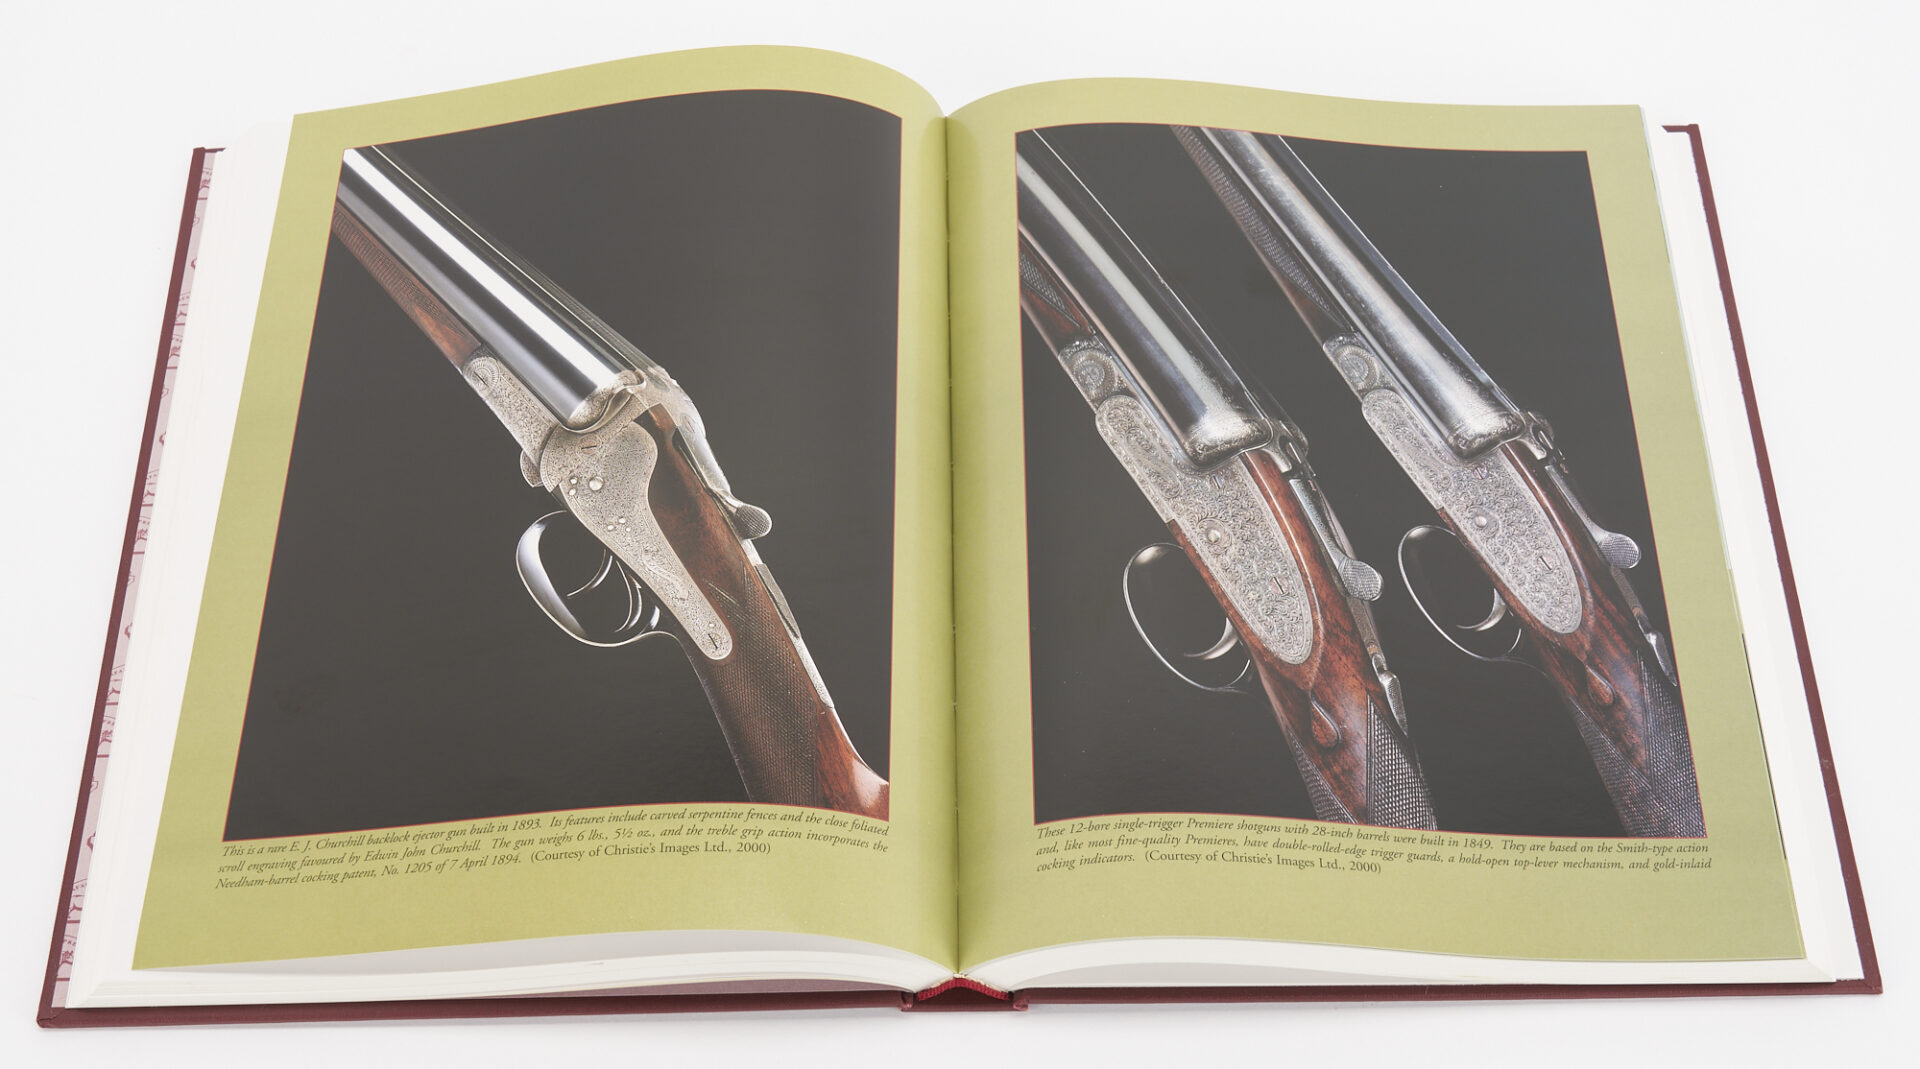 Lot 613: 3 Signed 1st Edition Sporting Firearms Series Books, Safari Press